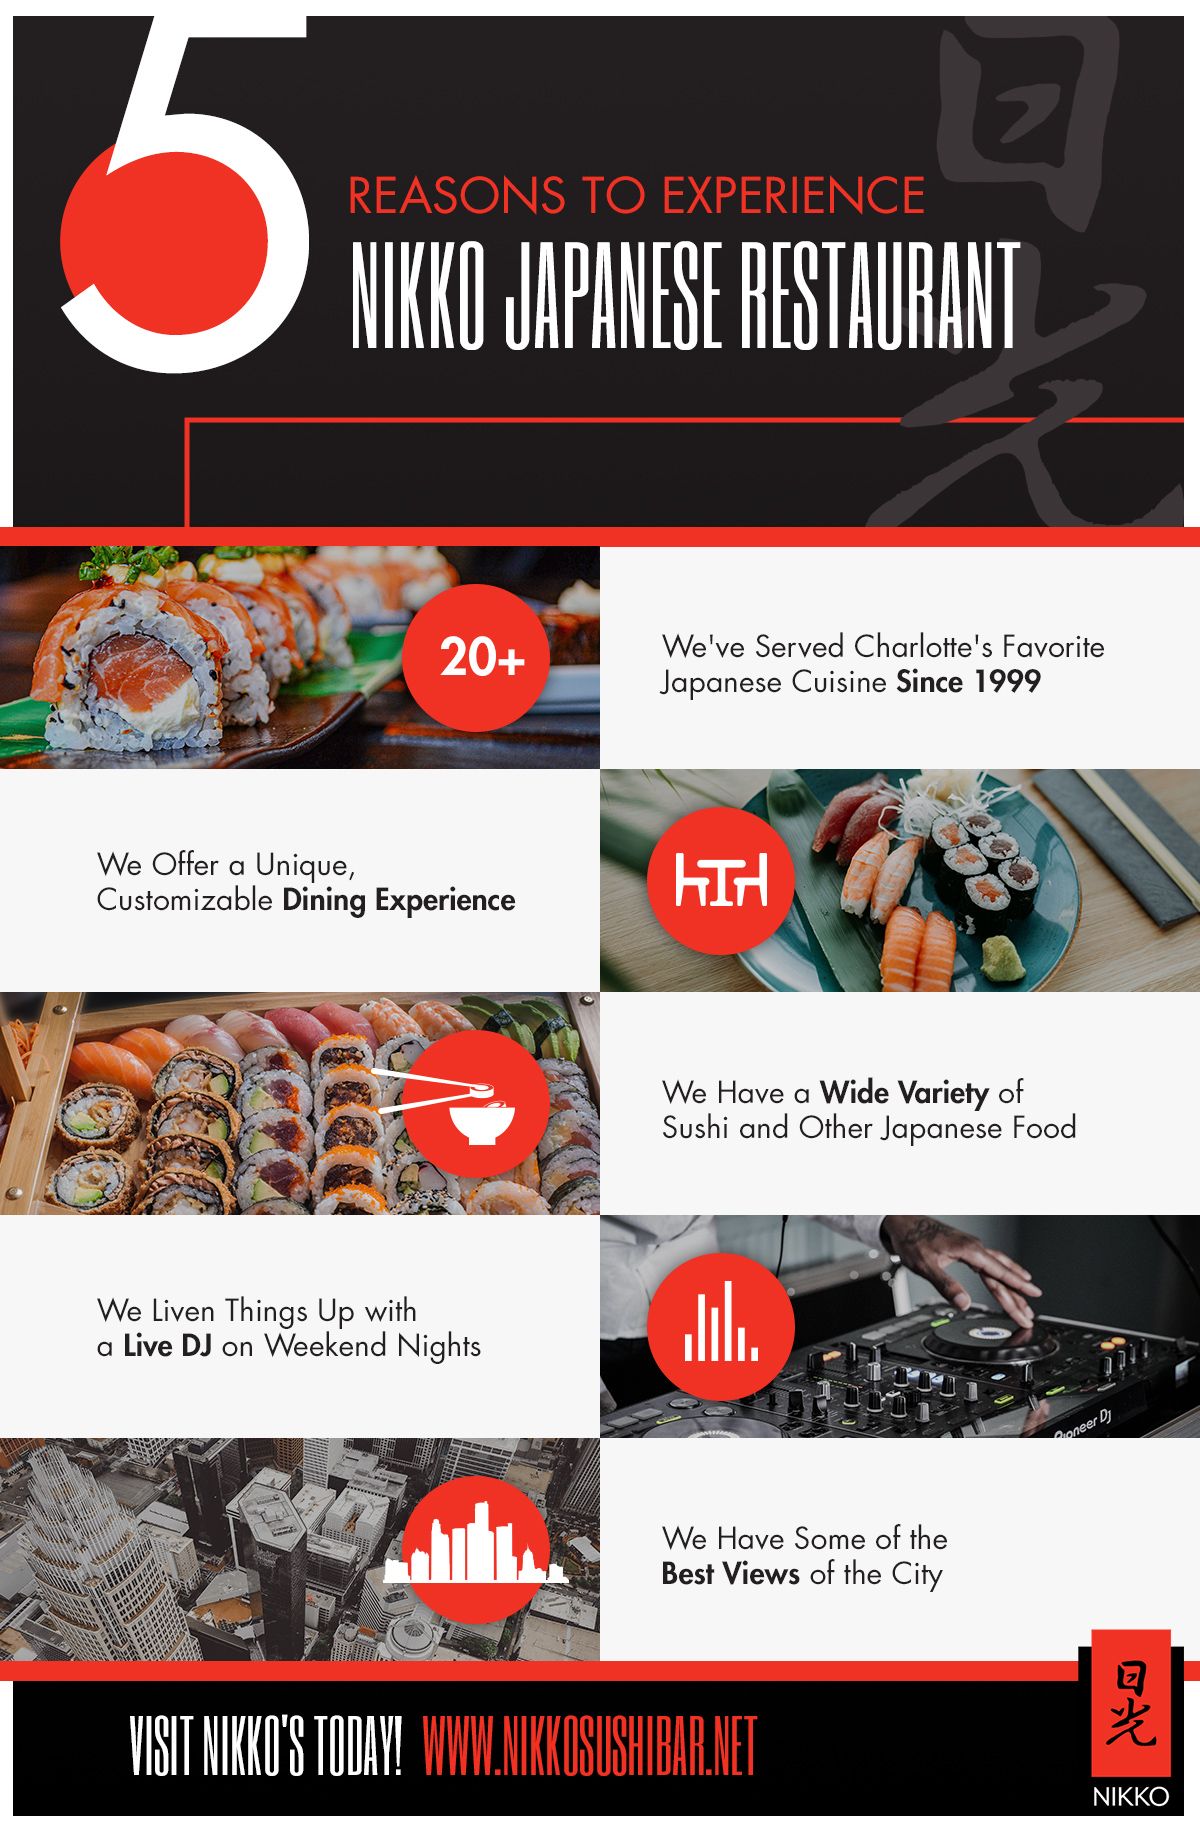 11.9.21_Infographic_Five Reasons to Experience Nikko Japanese Restaurant.jpg